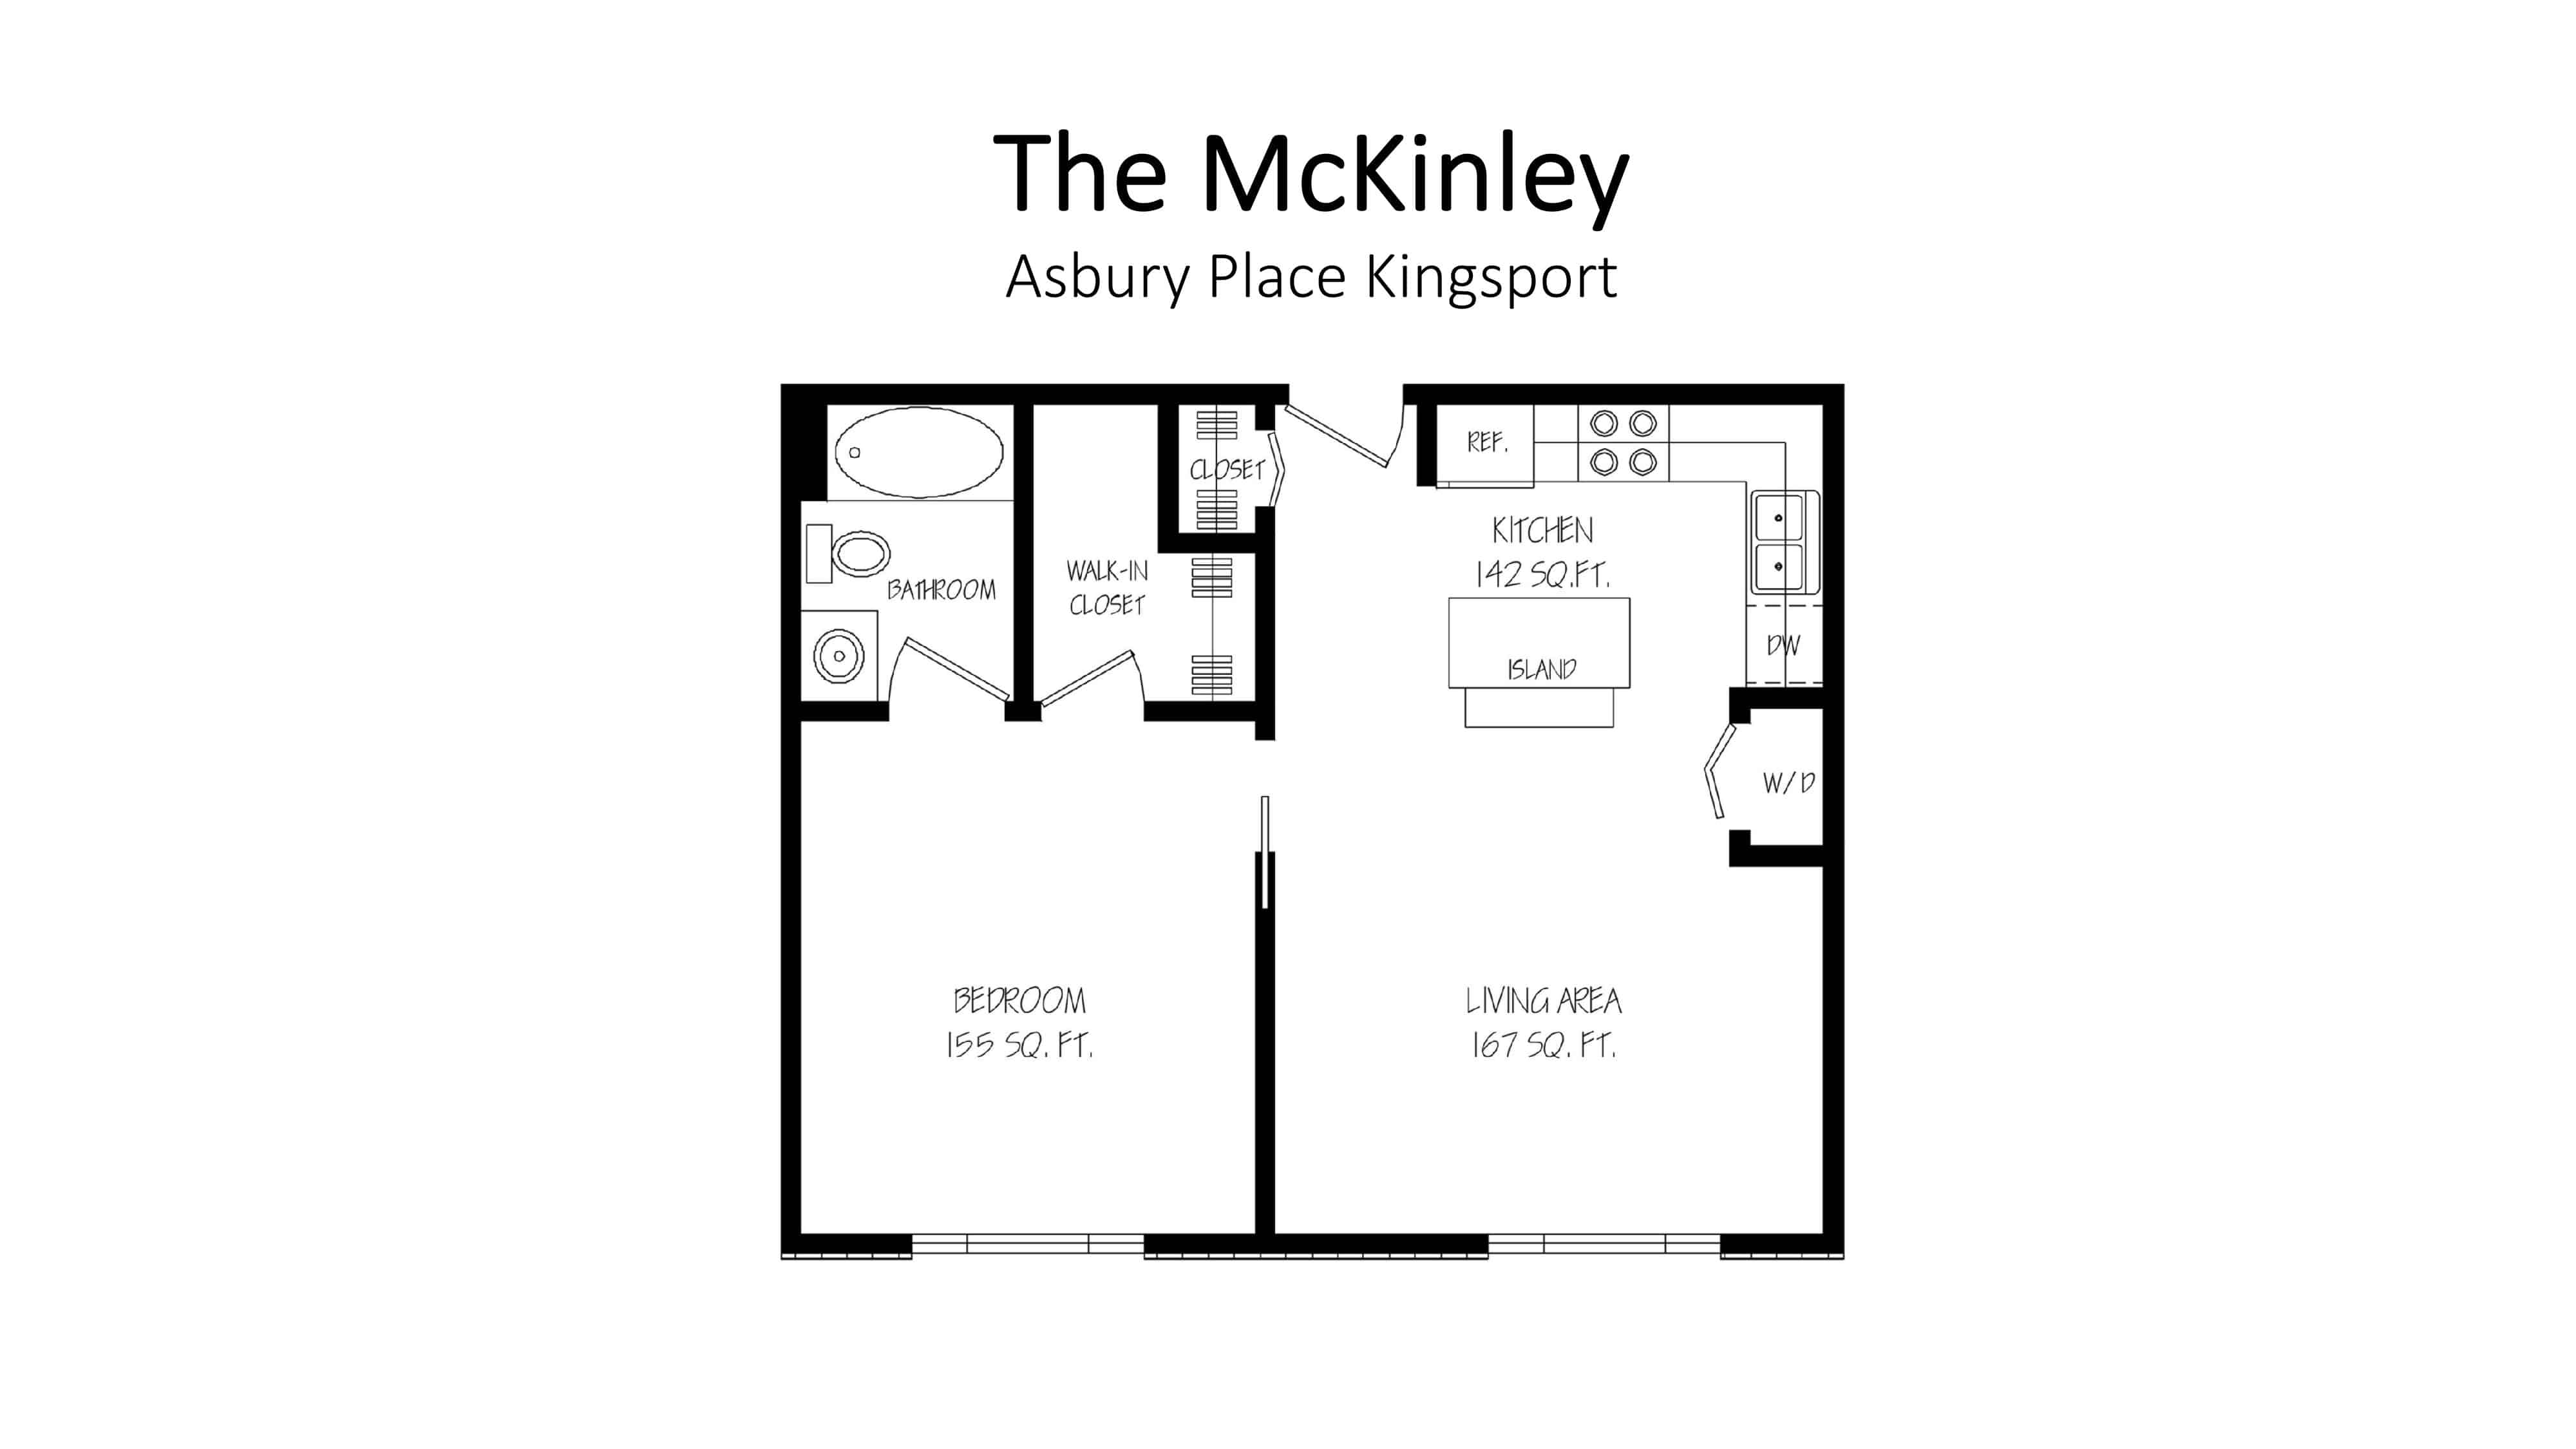 Asbury Place Kingsport The McKinley Floorplan